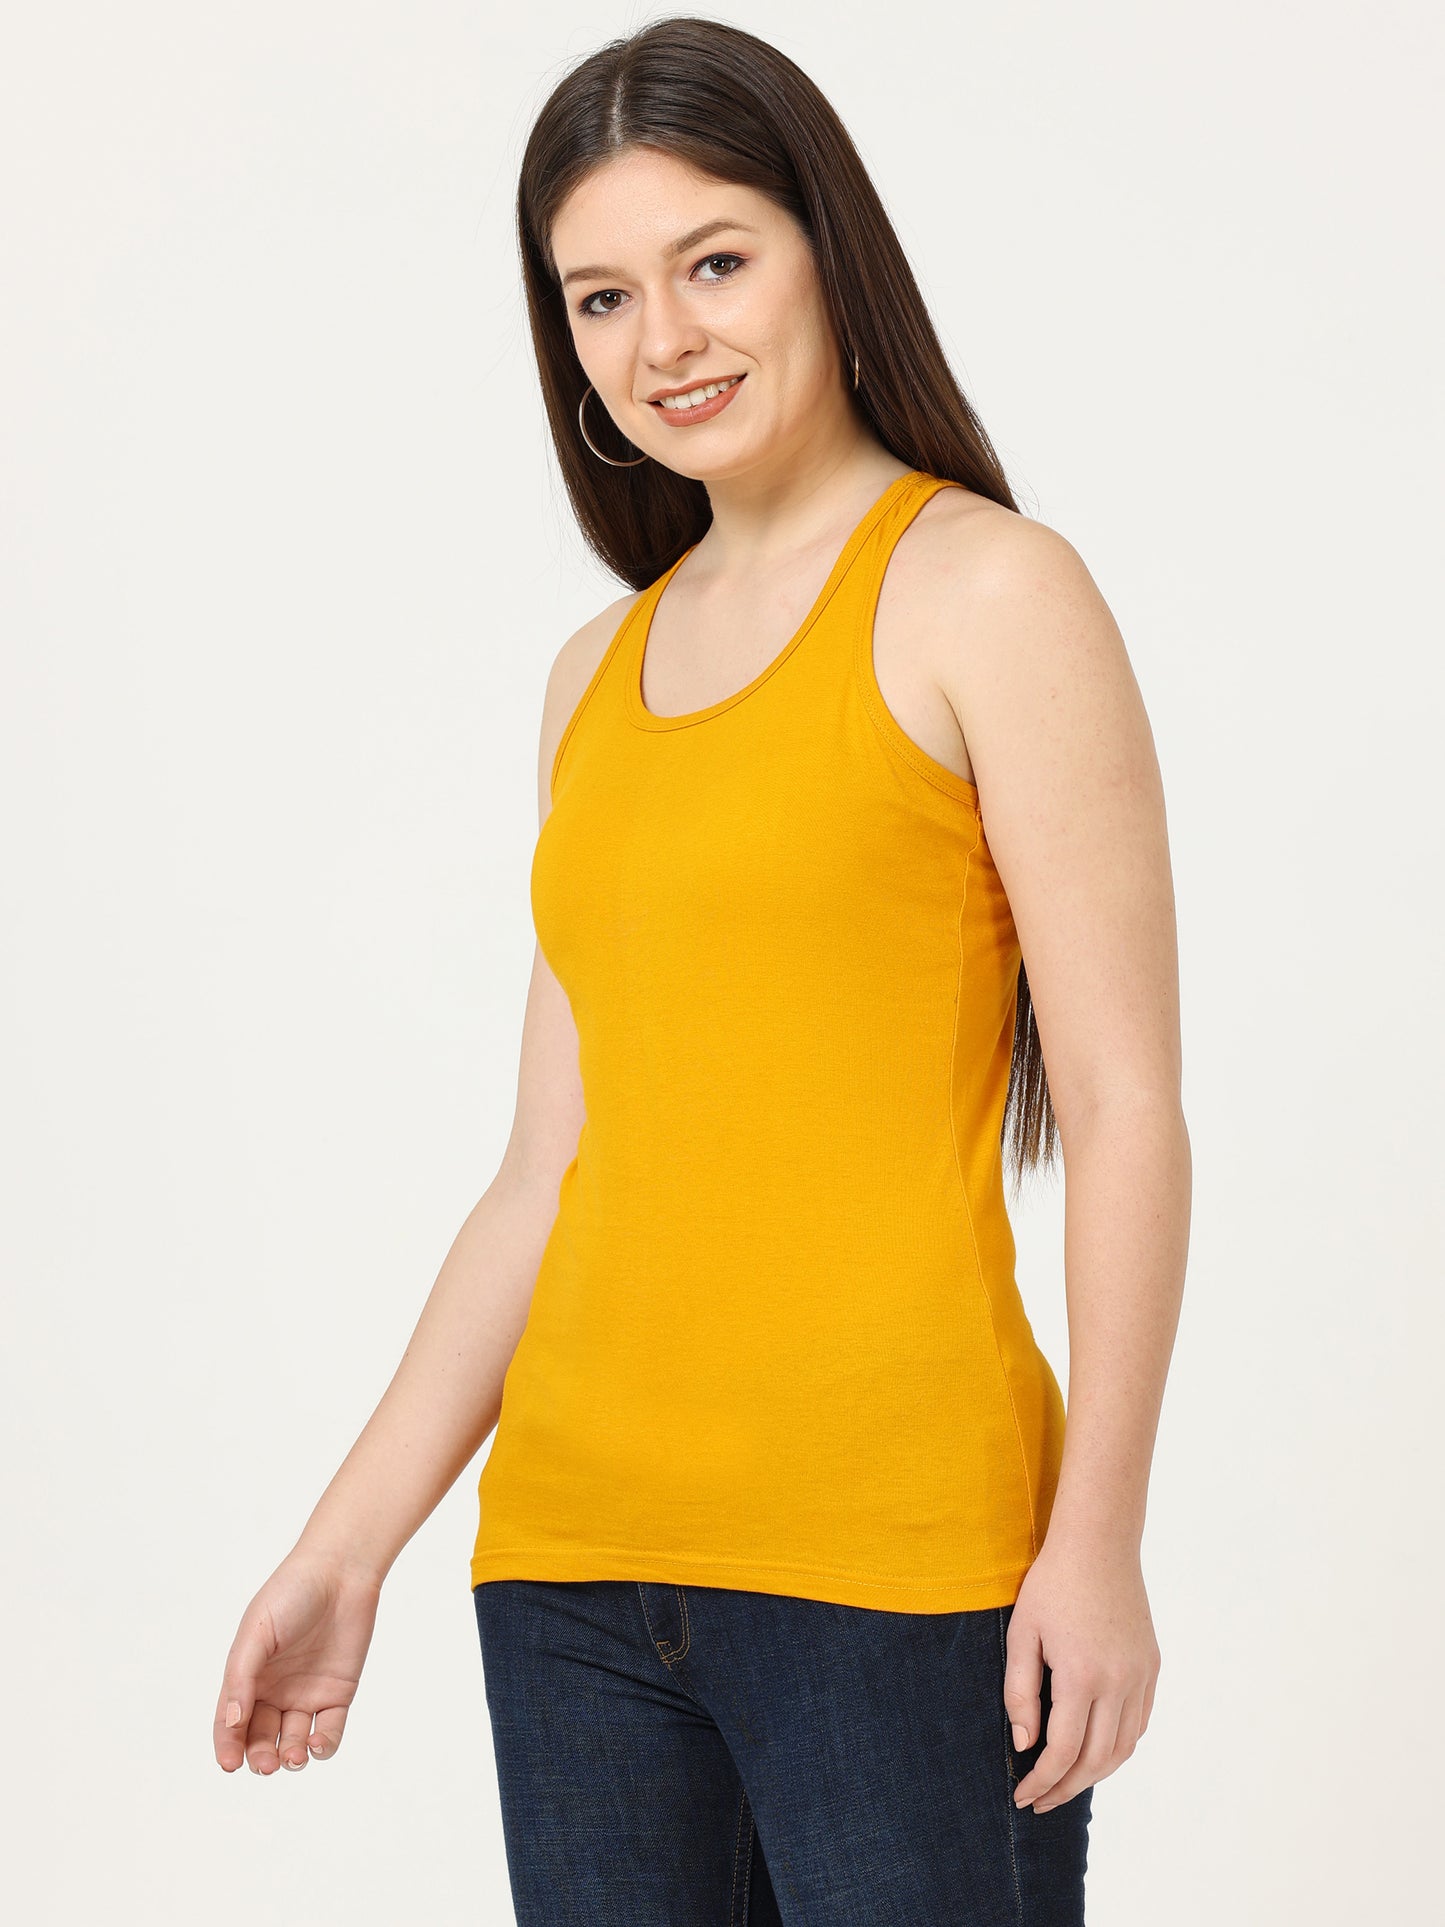 Women's Cotton Plain Sleeveless Mustard Yellow Color Top